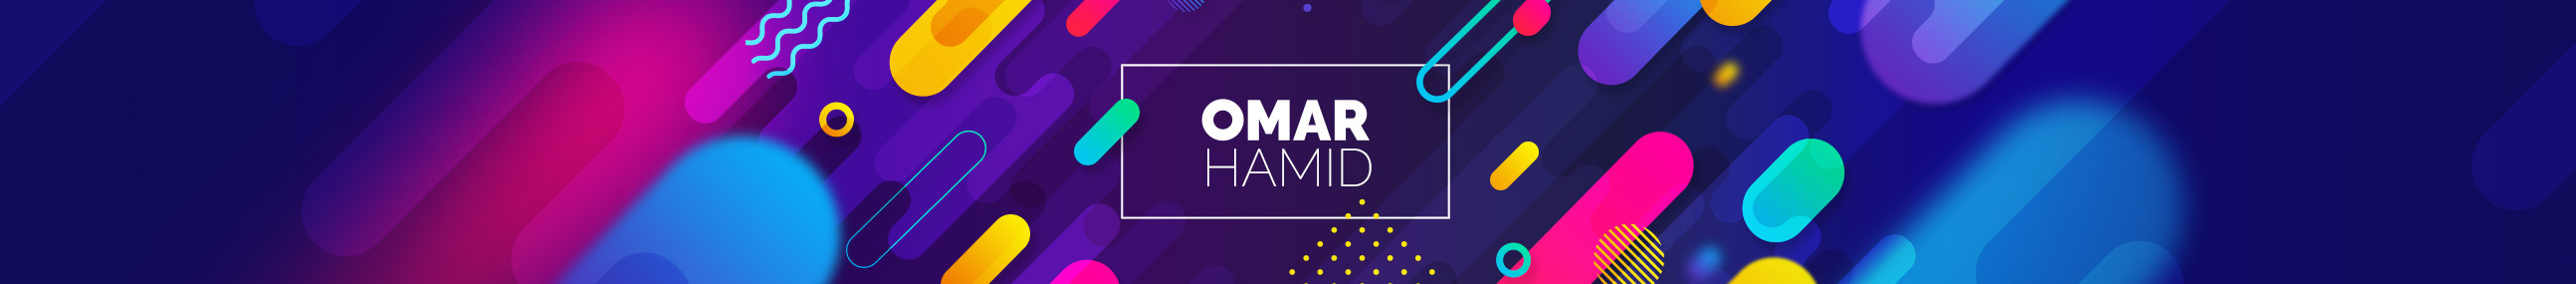 Omar Hamids profilbanner